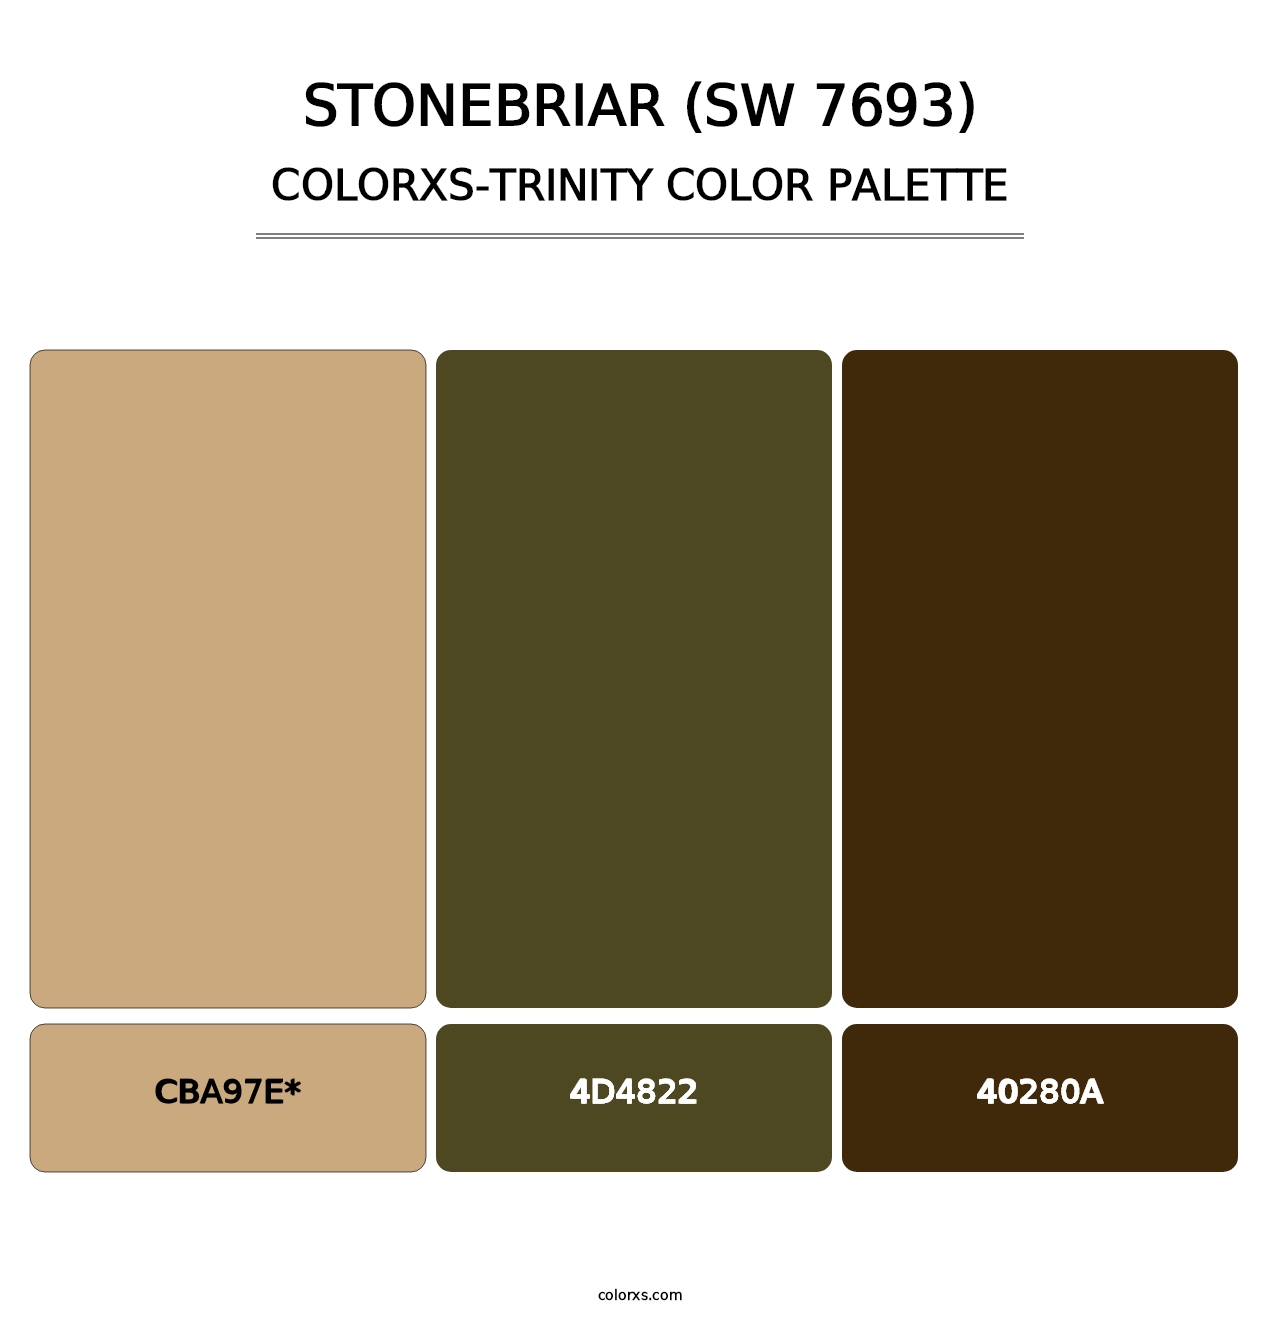 Stonebriar (SW 7693) - Colorxs Trinity Palette